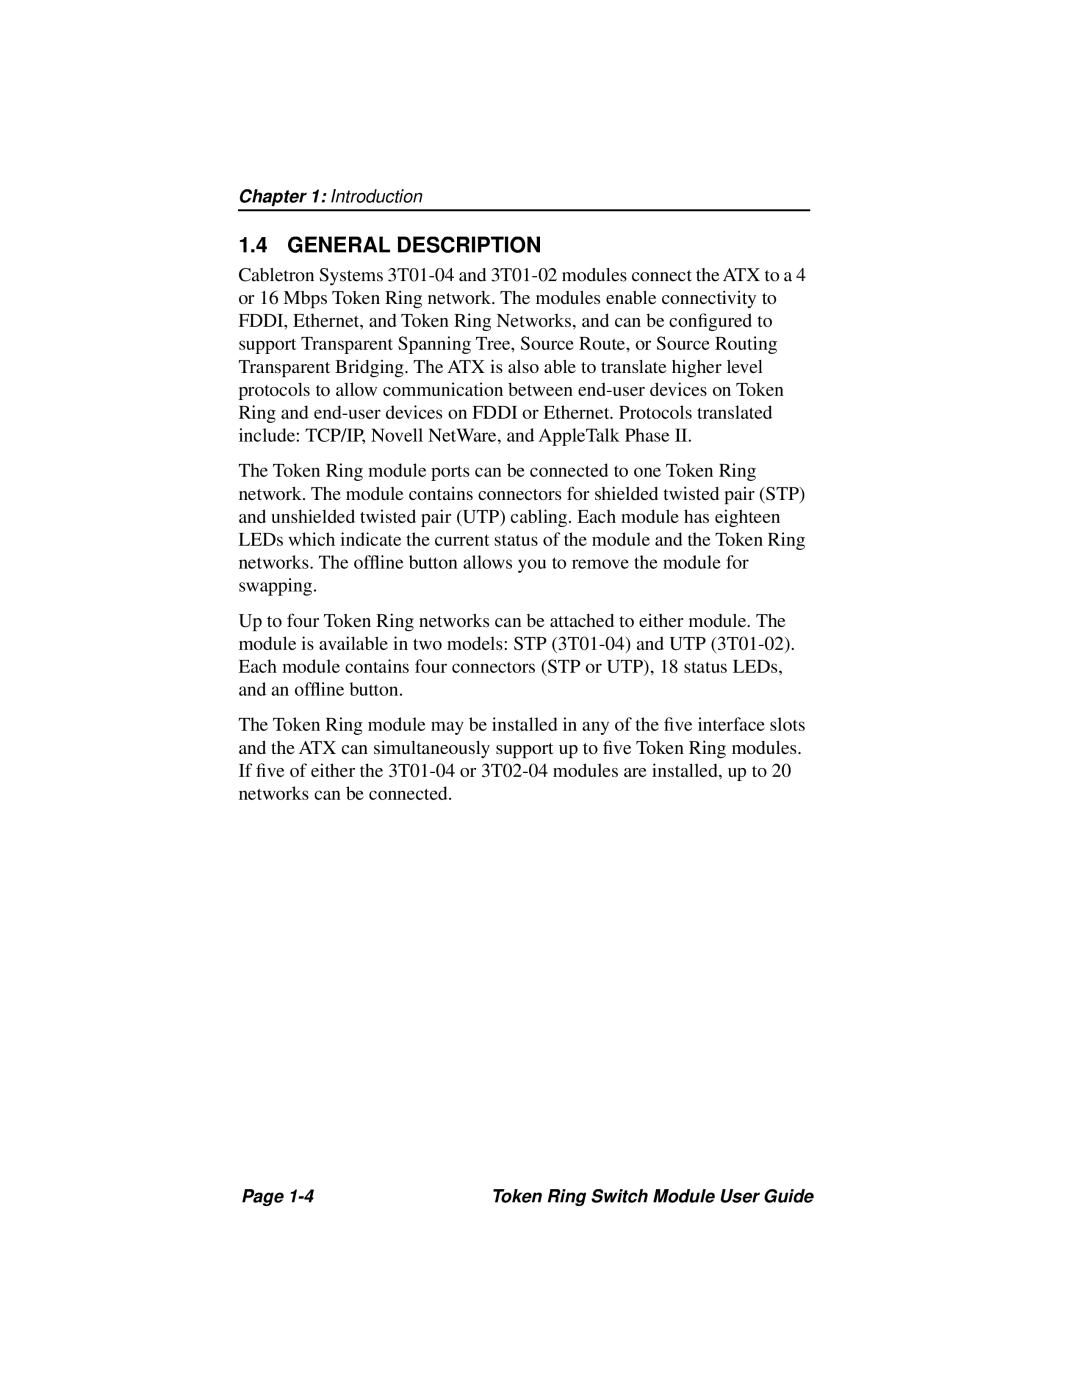 Cabletron Systems 3T02-04 manual General Description 